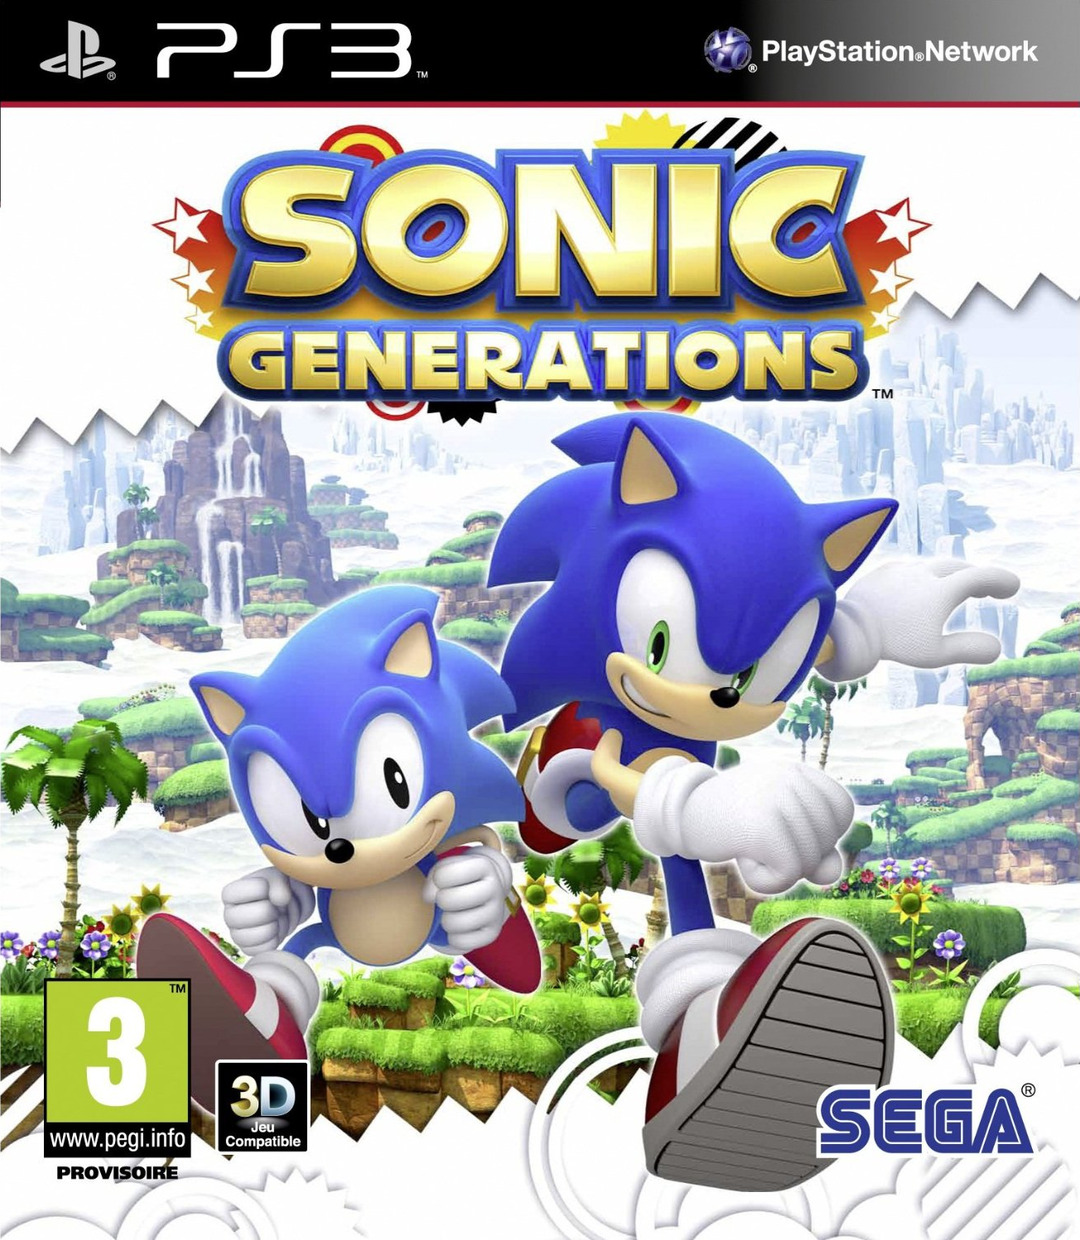 Sonic generation